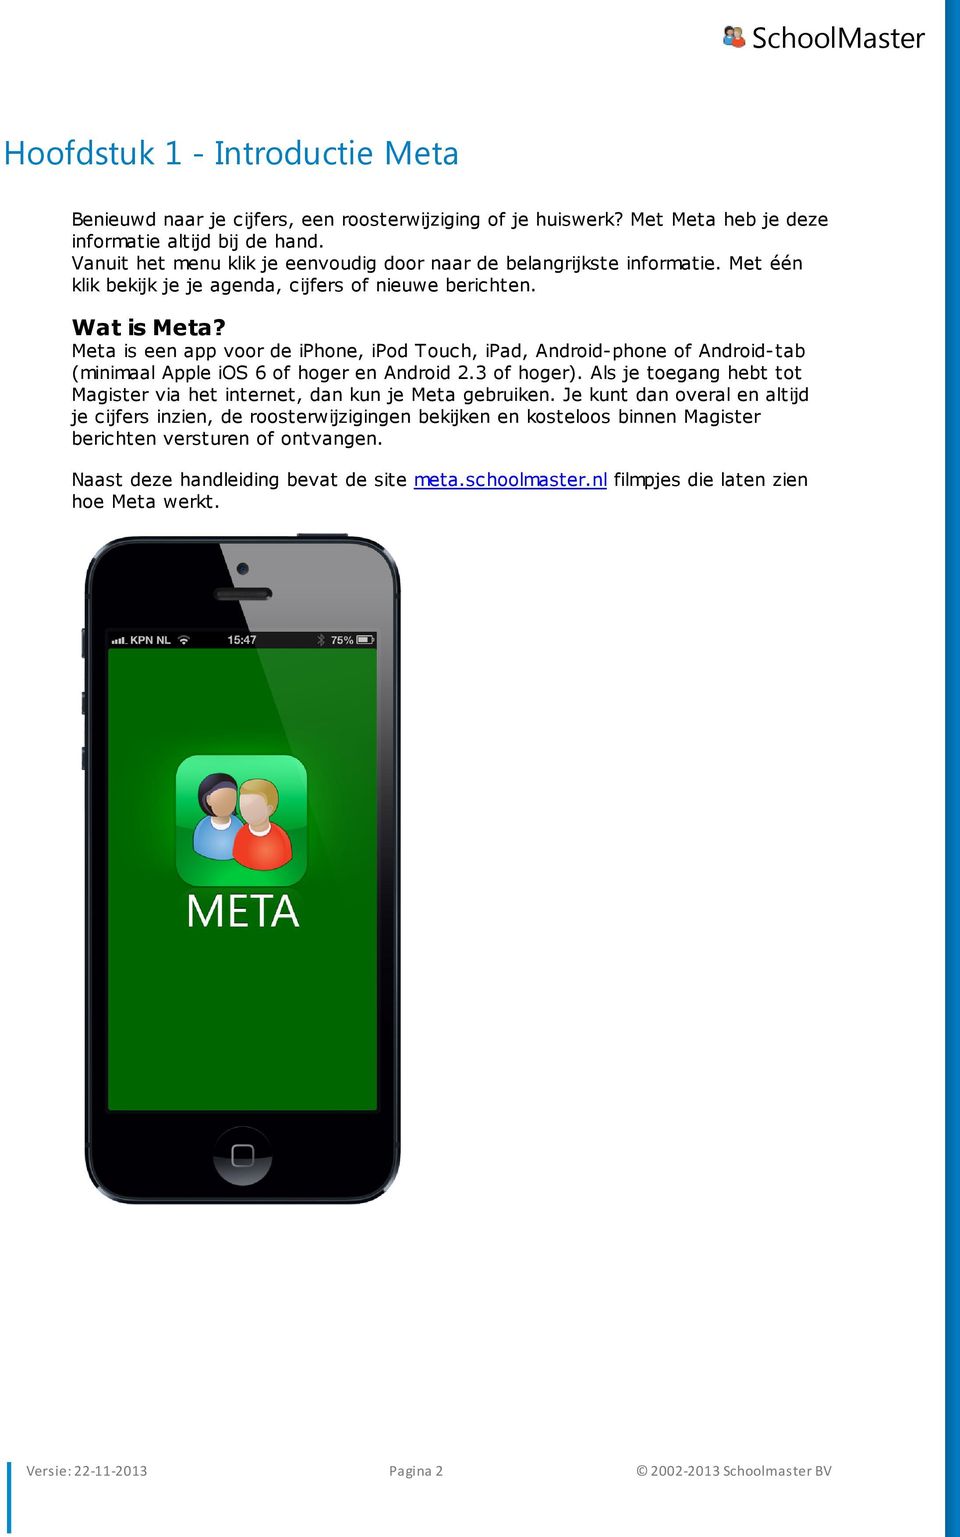 Meta is een app voor de iphone, ipod Touch, ipad, Android-phone of Android-tab (minimaal Apple ios 6 of hoger en Android 2.3 of hoger).